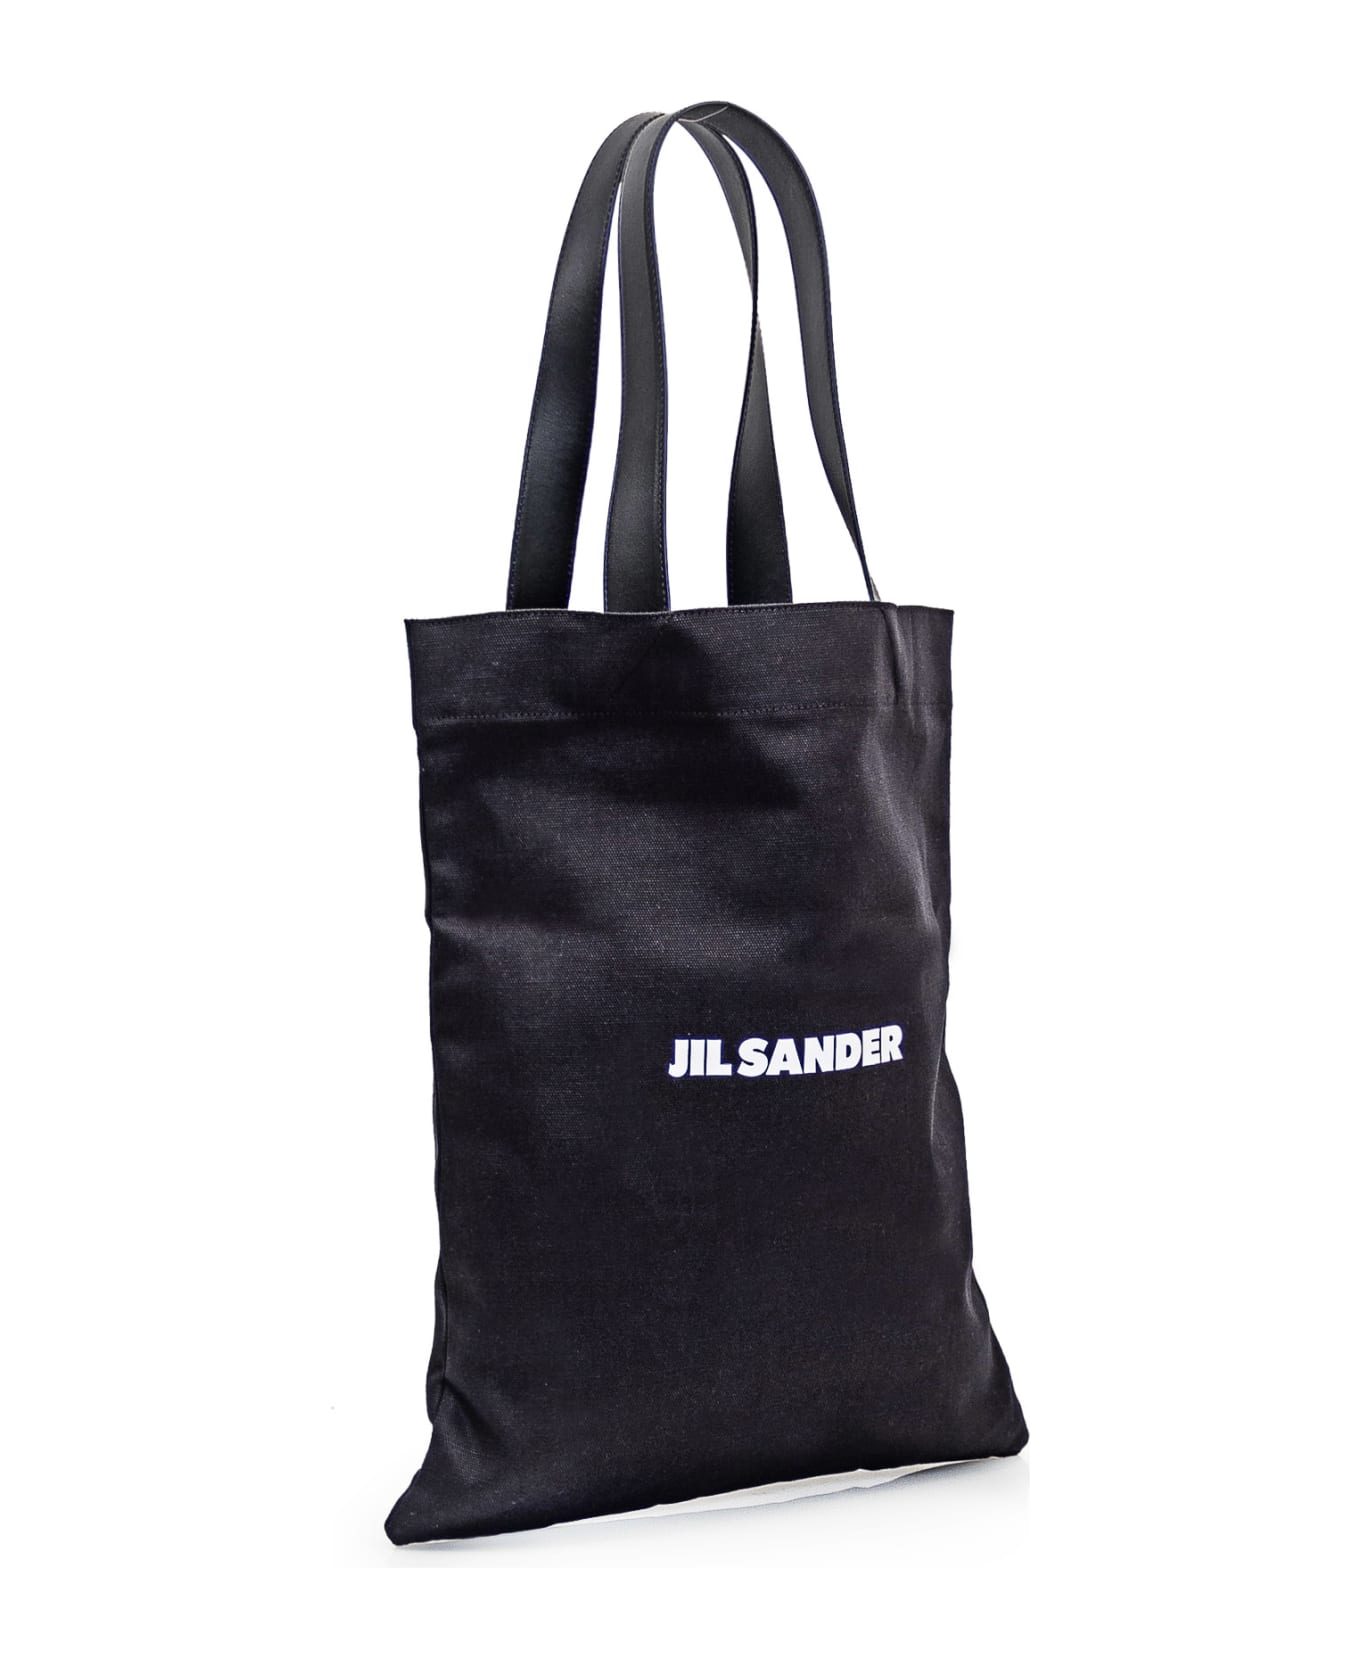 Jil Sander Black Tela Bag - 001 トートバッグ